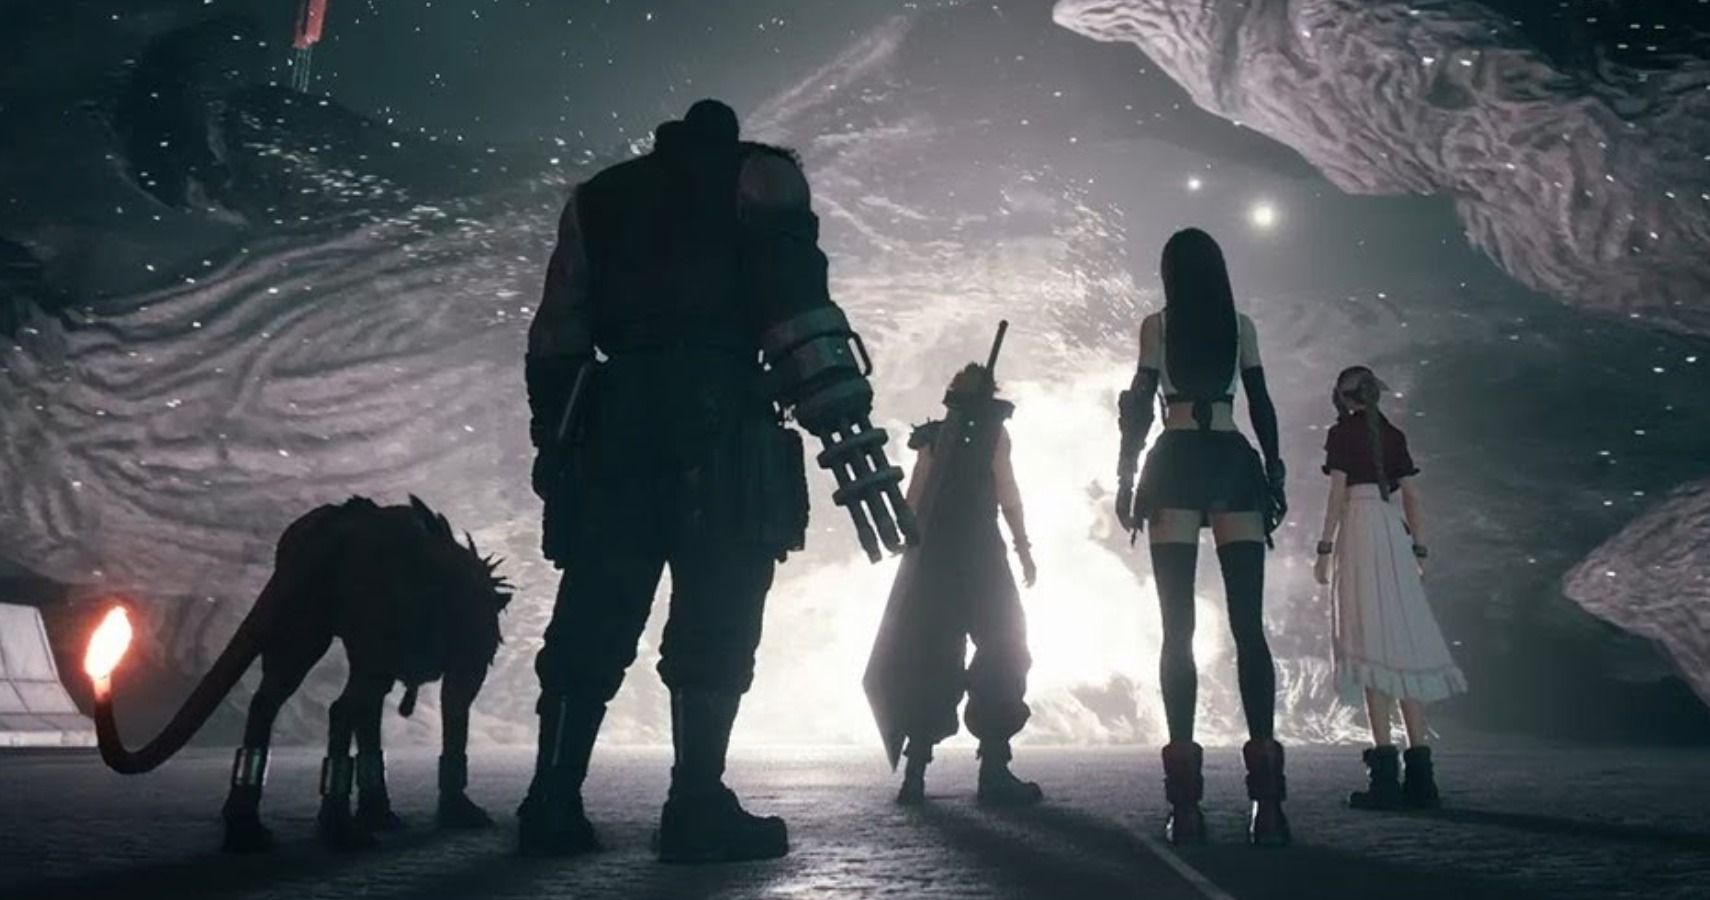 Final Fantasy 7 Remake: Here's how it handles the cross-dressing scene